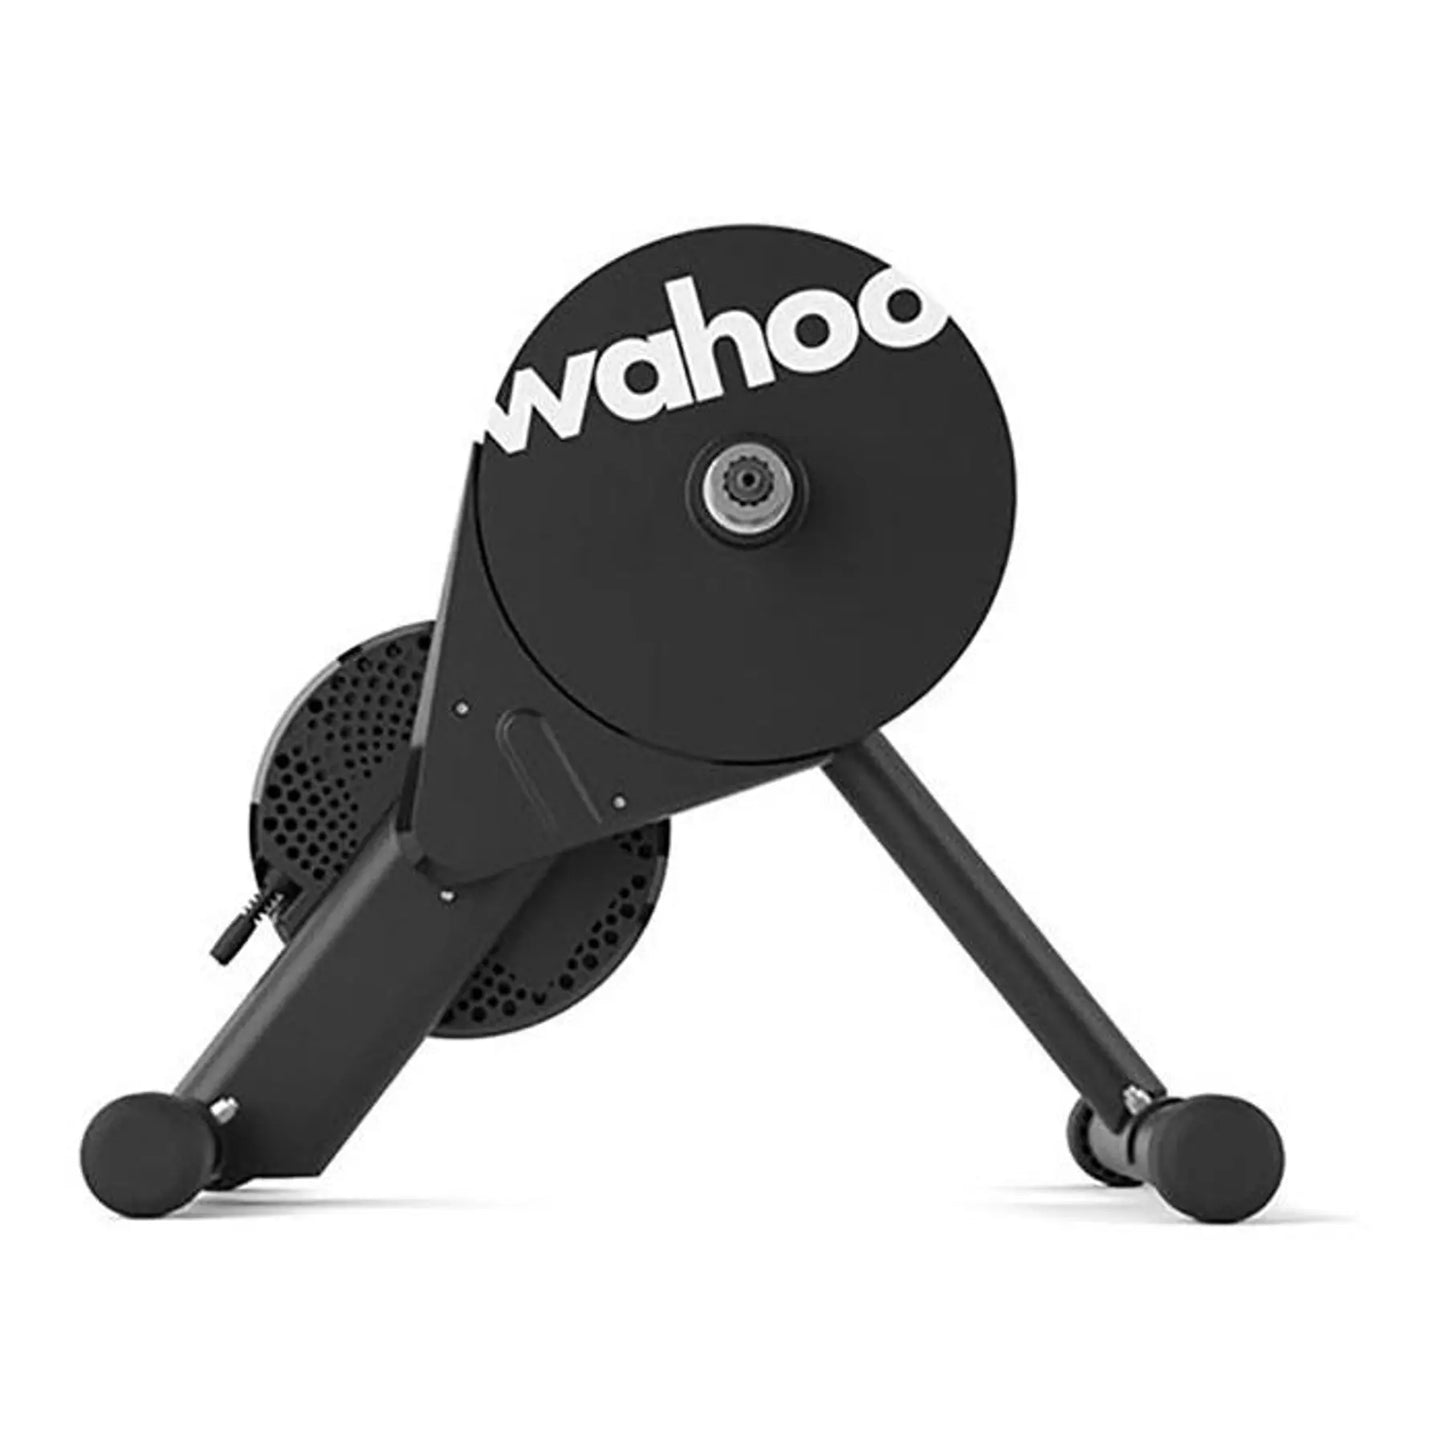 Rodillo de Transmisión Directa WAHOO Kickr Core Smart